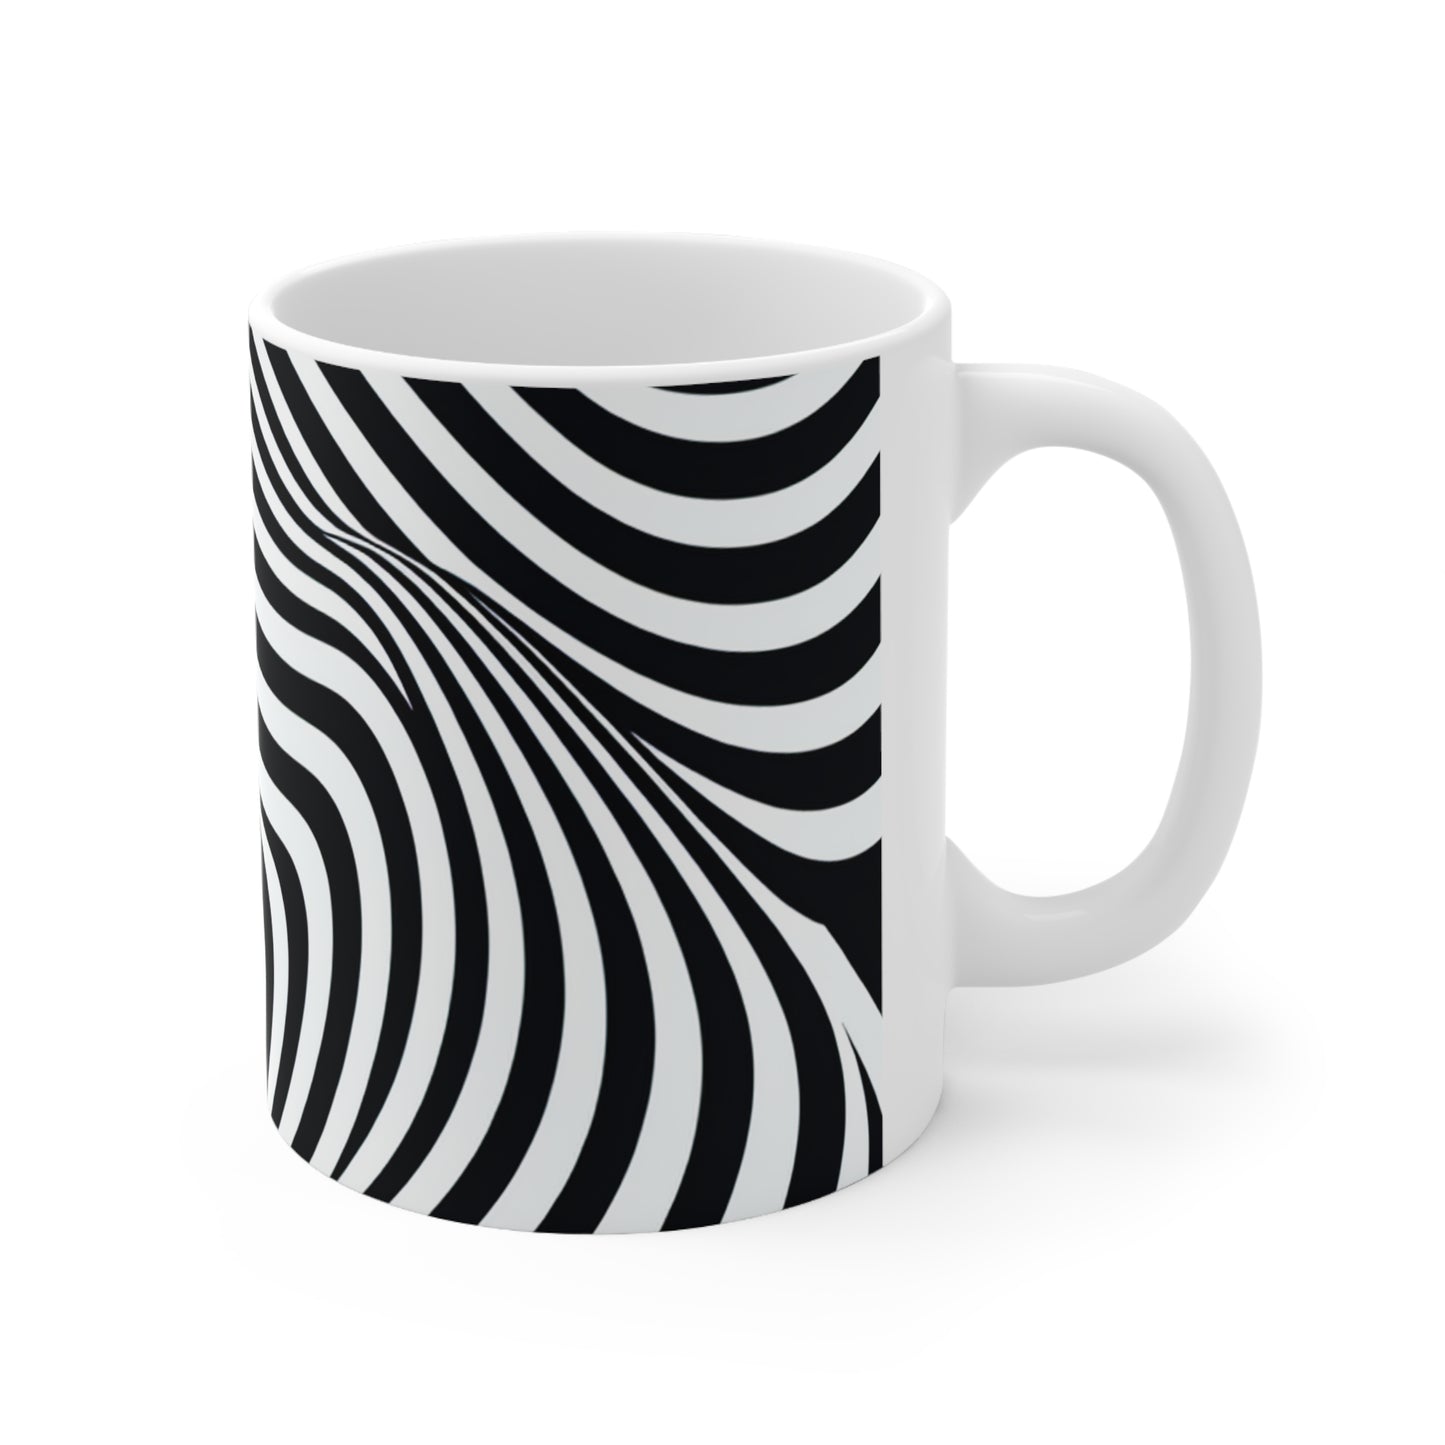 "Optical Illusion Wave" - The Alien Ceramic Mug 11oz Op Art Style